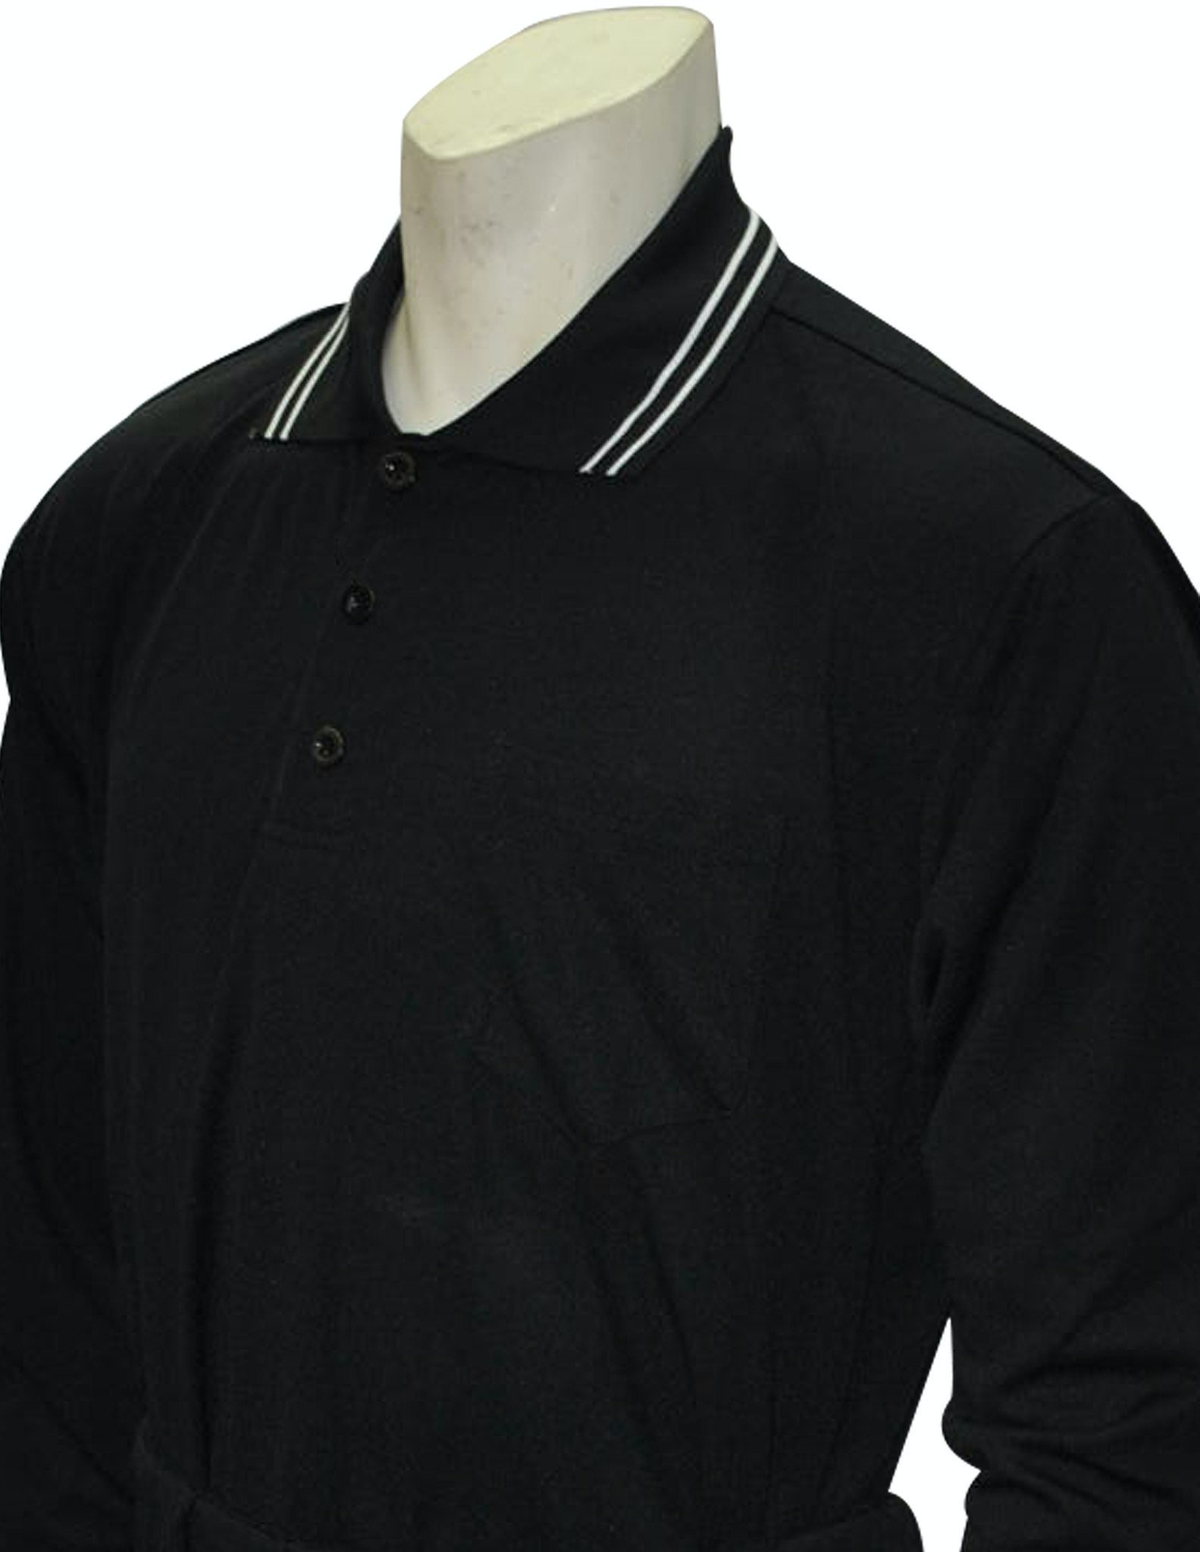 Smitty | BBS-301 | Performance Mesh Umpire Long Sleeve Shirt